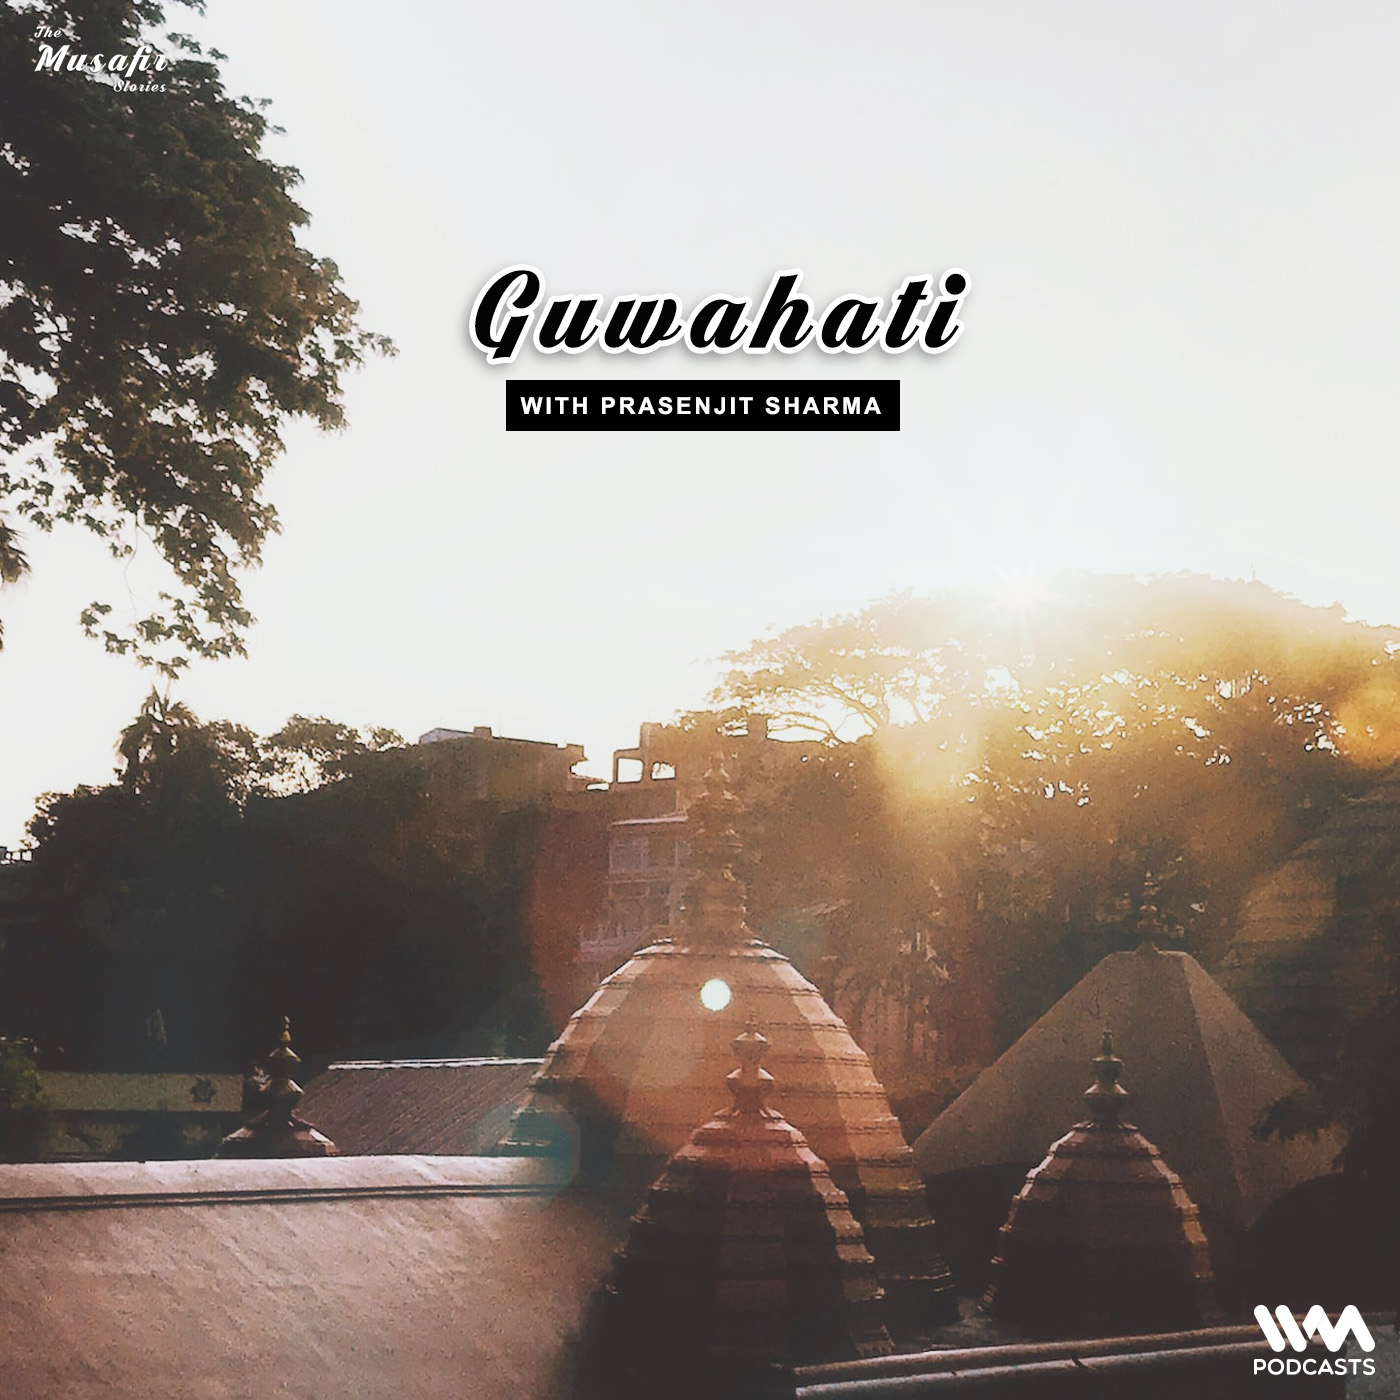 Guwahati - A Spiritual Trail with Prasenjit Sharma